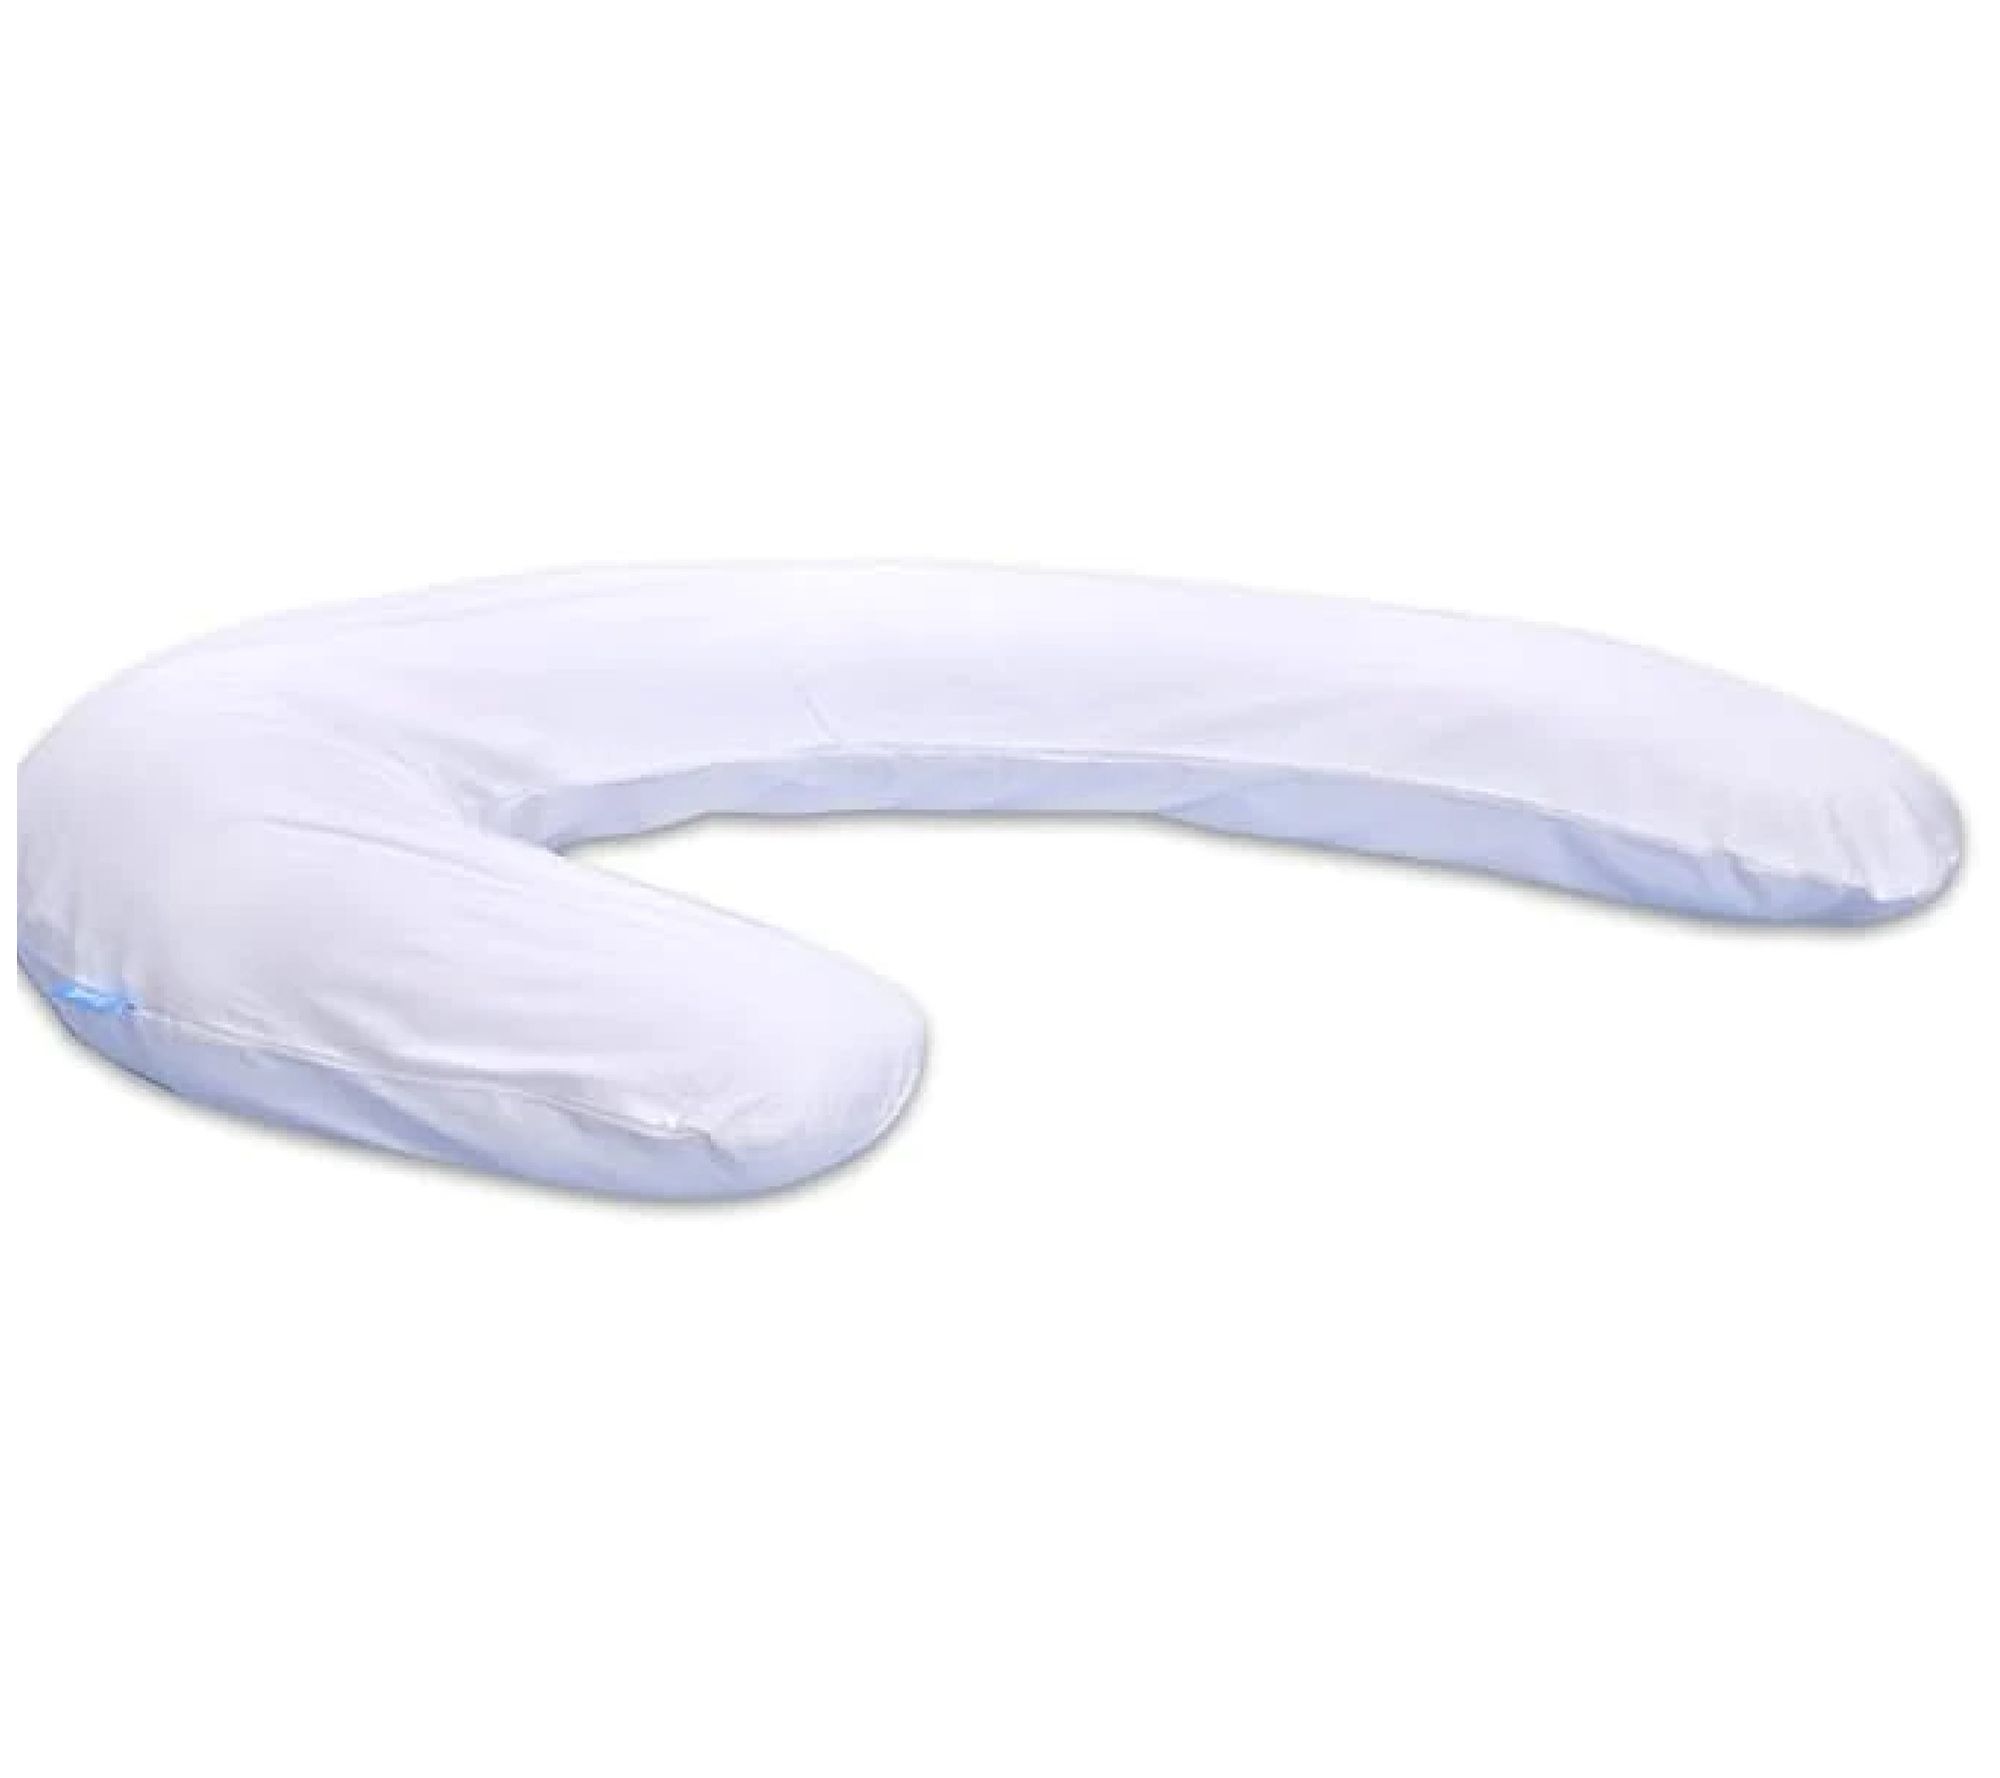 Contour Swan Full Body Pillow